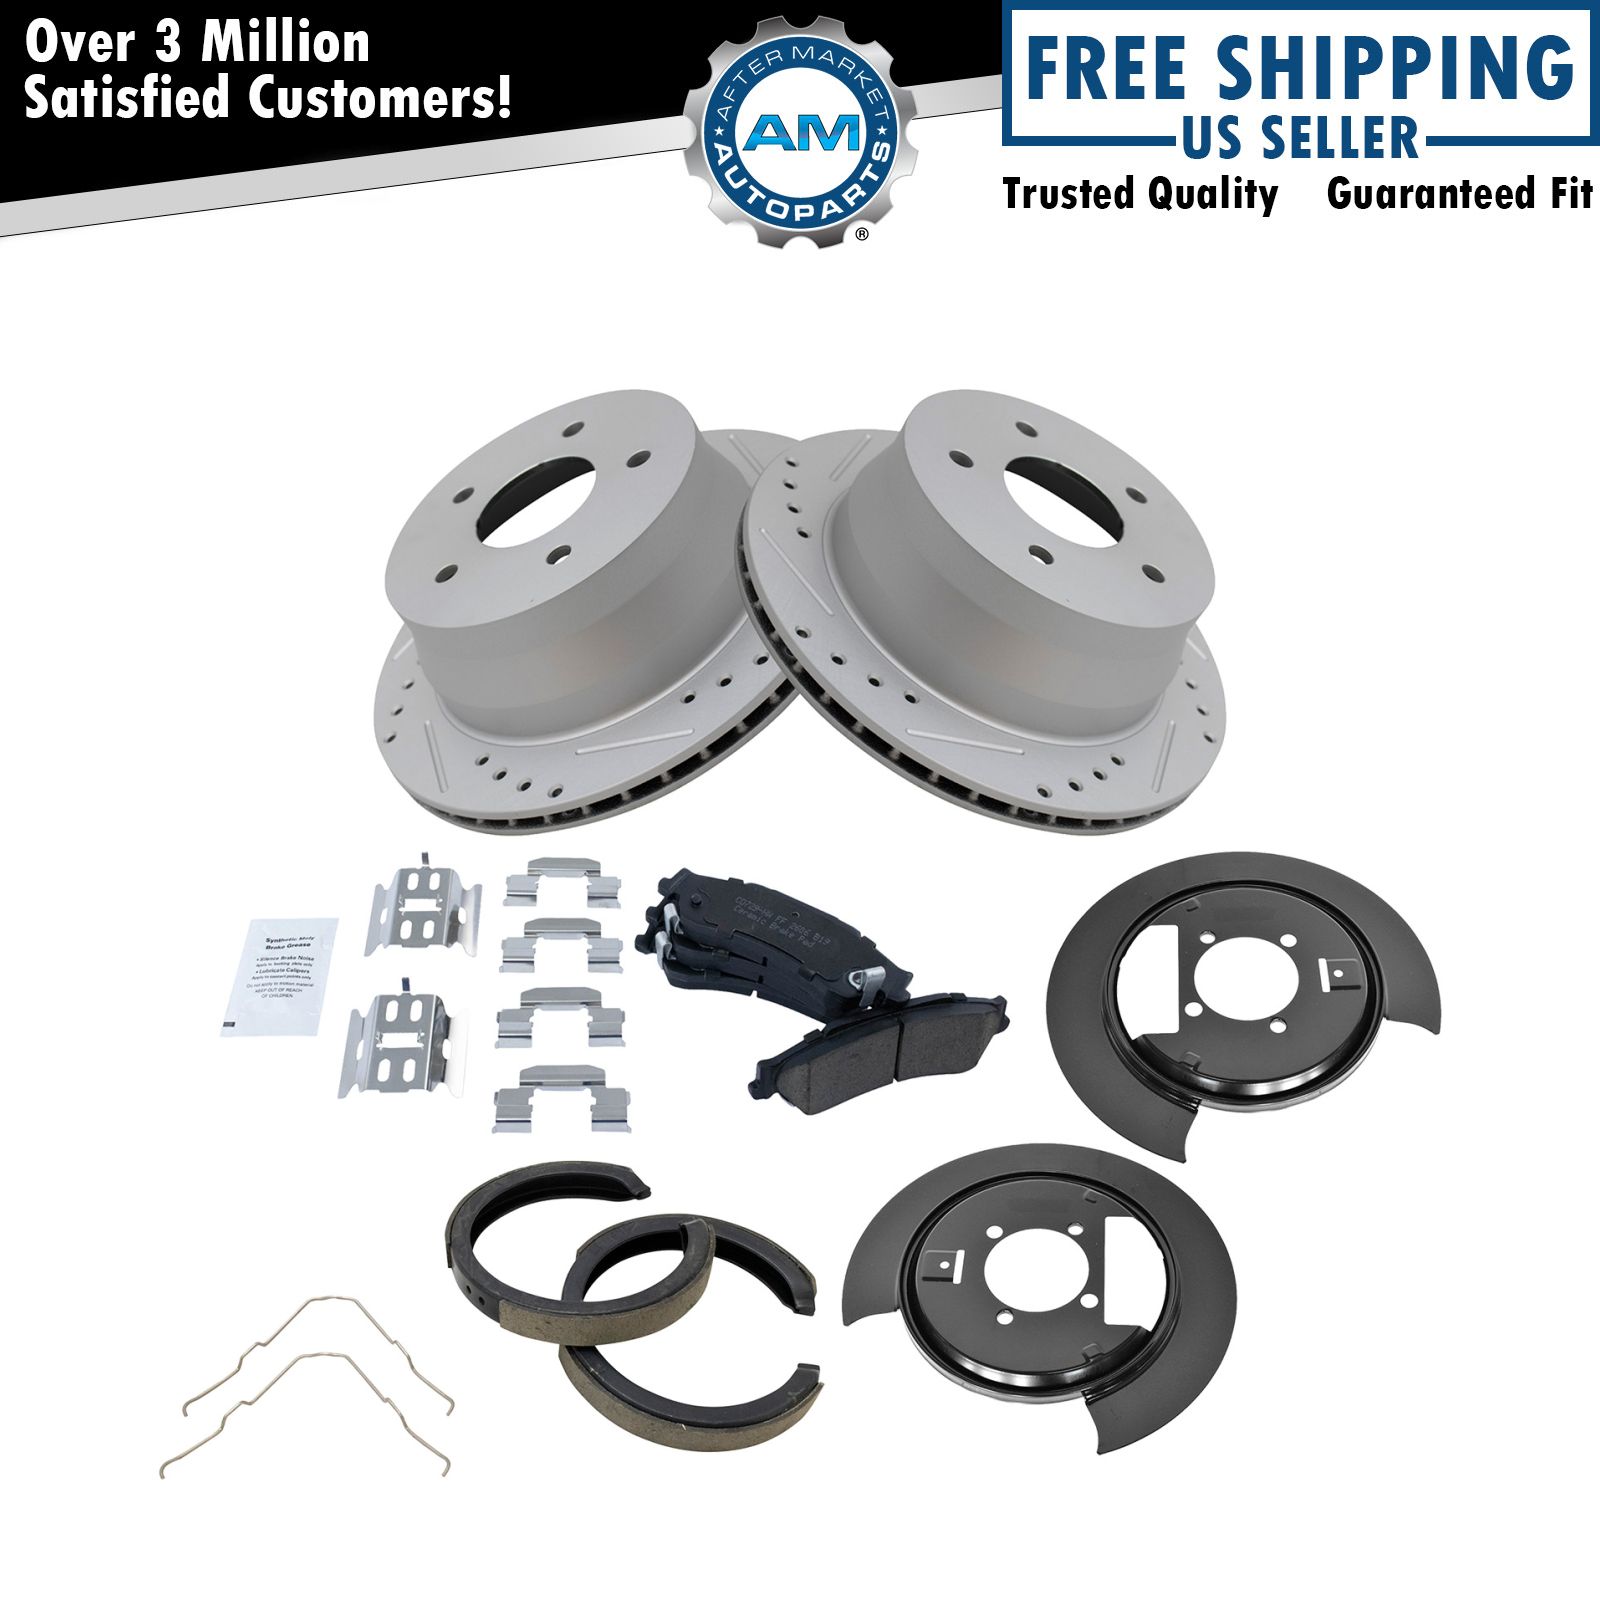 Rear Ceramic Brake Pad, Performance Rotor, Dust Shield & Parking Shoe Kit